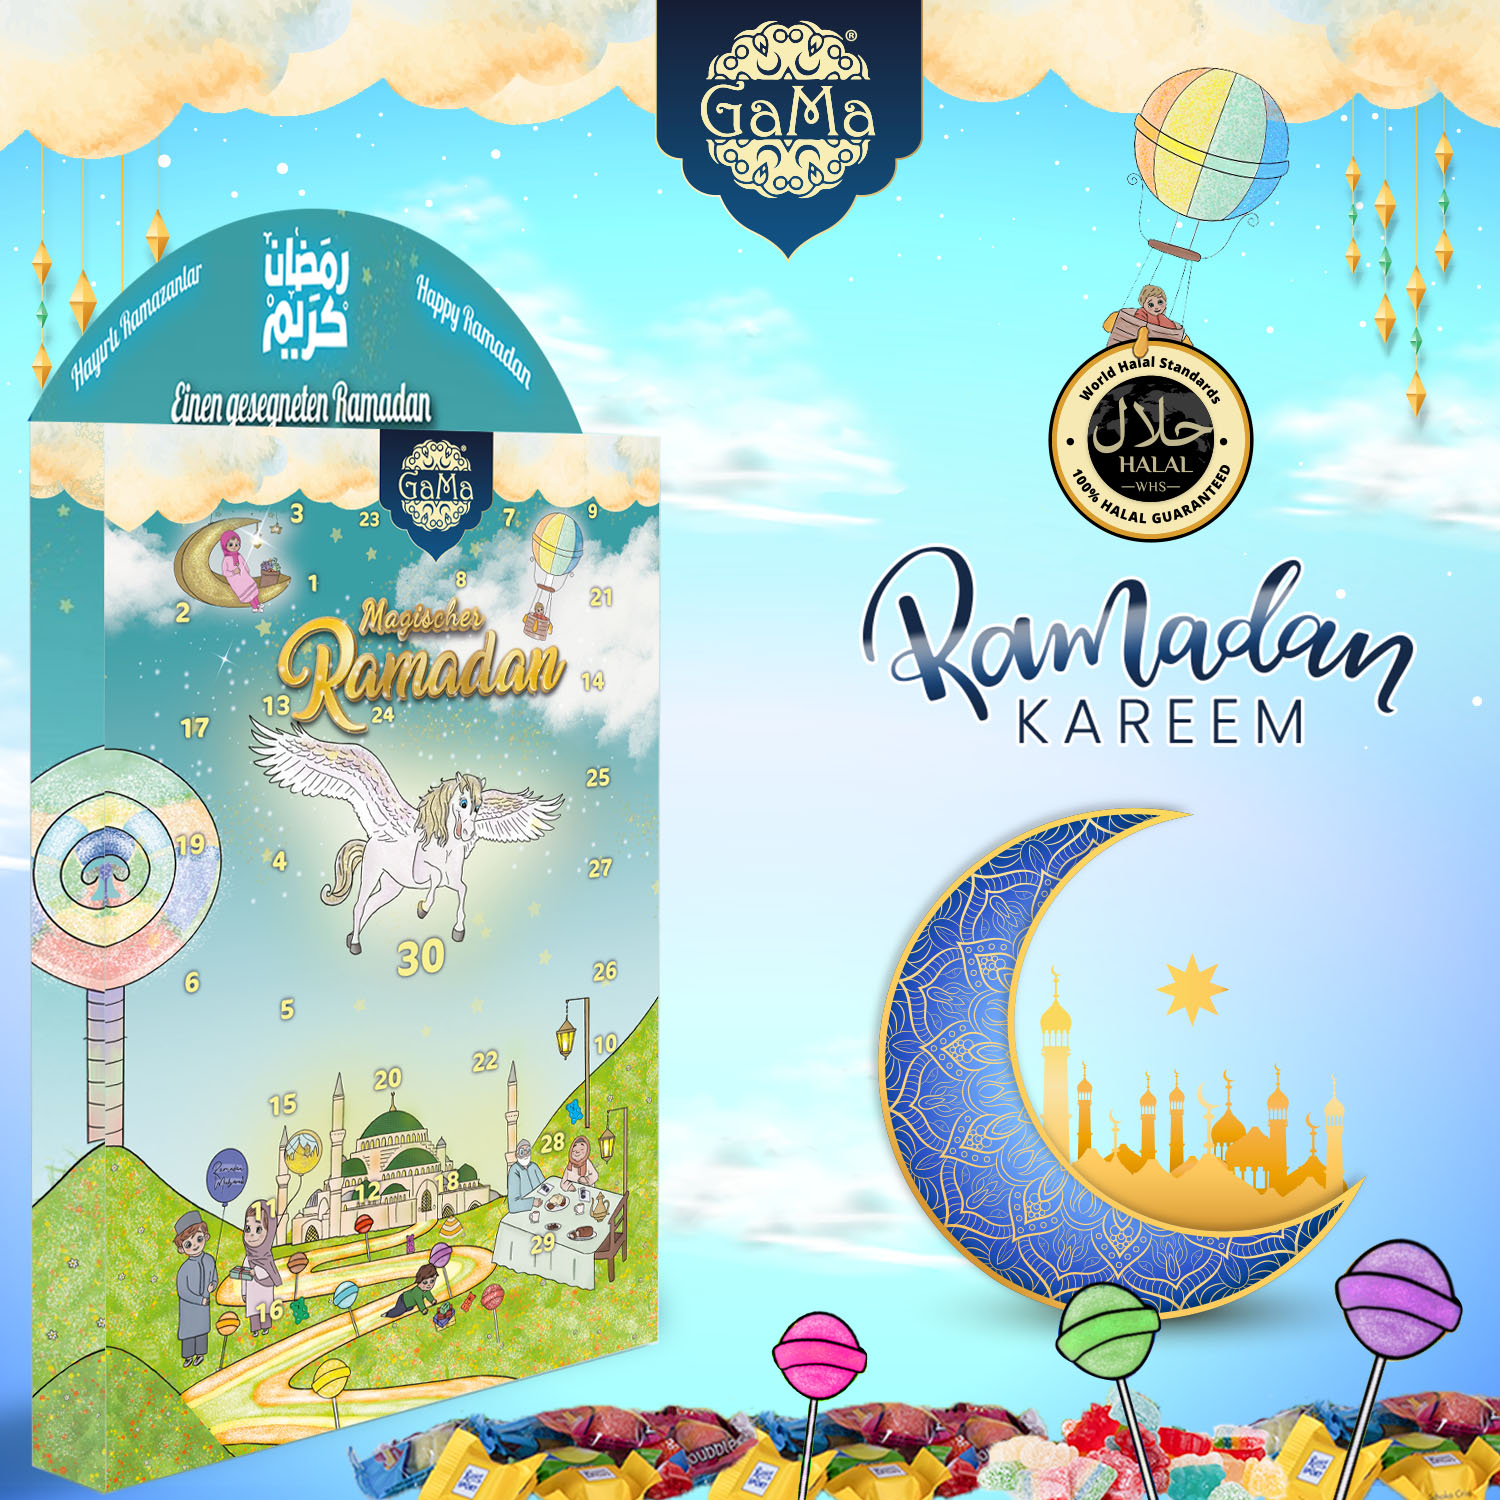 Calendrier du ramadan PlayKube